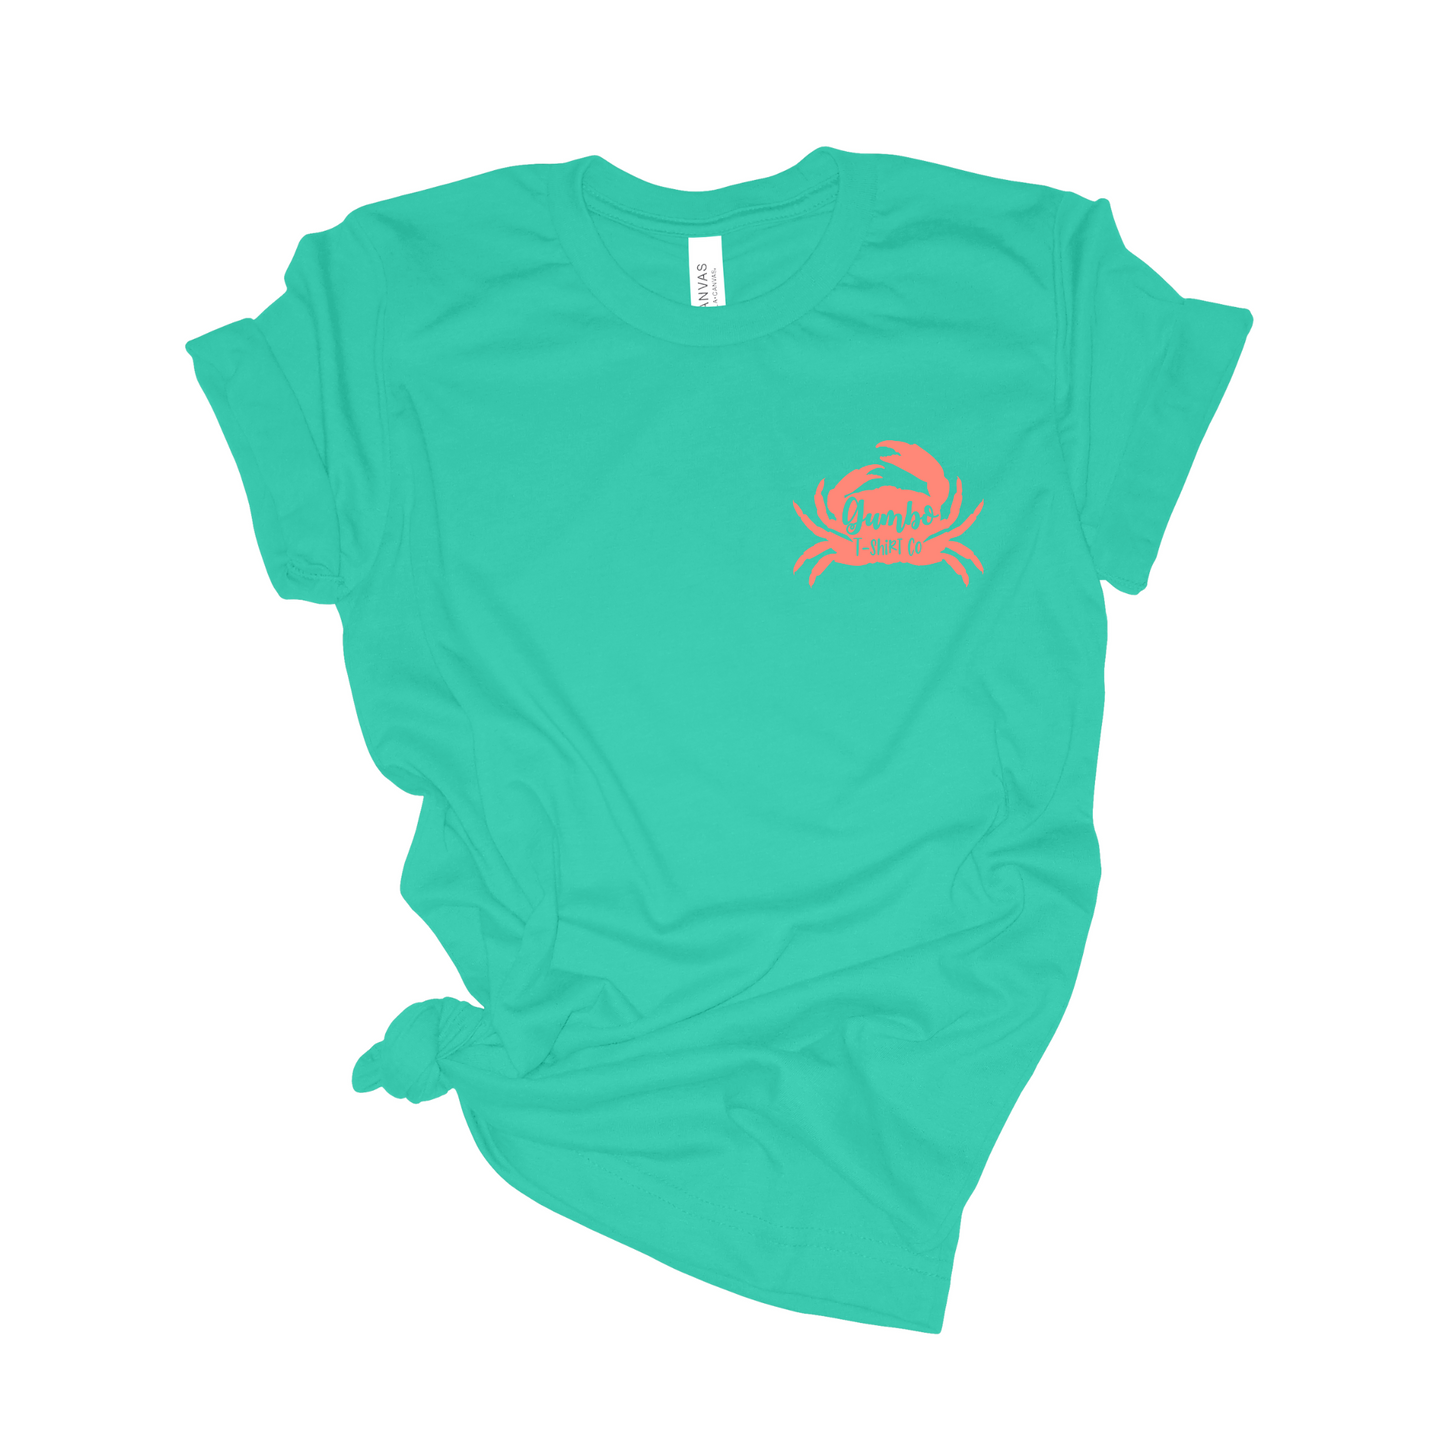 Teal Bella Canvas Tshirt- Gumbo T-shirt Co Crab Logo Shirt- Summer Shirt- Bella Canvas 3001- Louisiana Tourist T-shirt